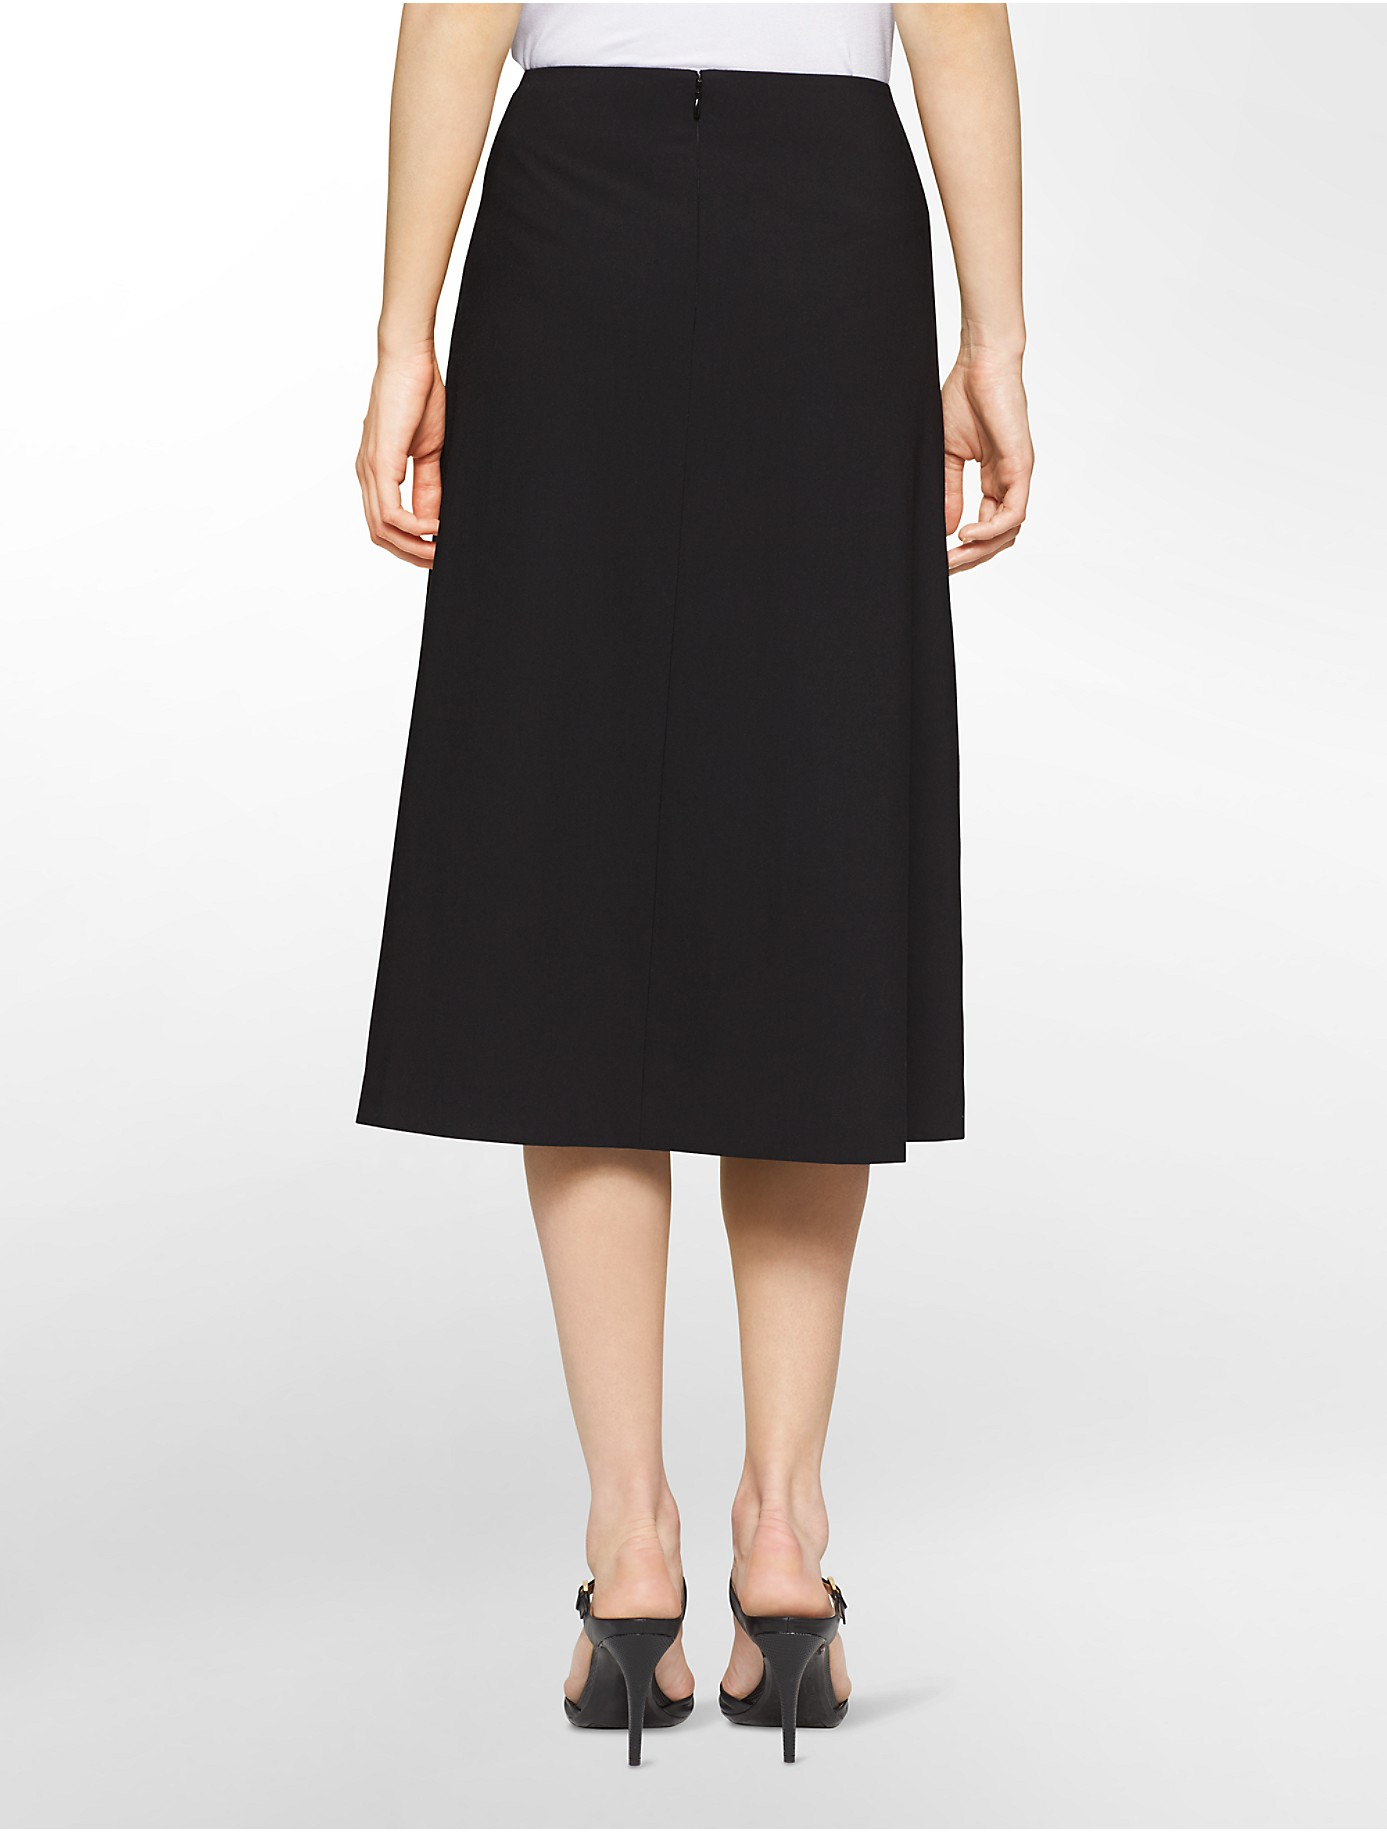 Lyst - Calvin Klein White Label A-line Midi Suit Skirt in Black